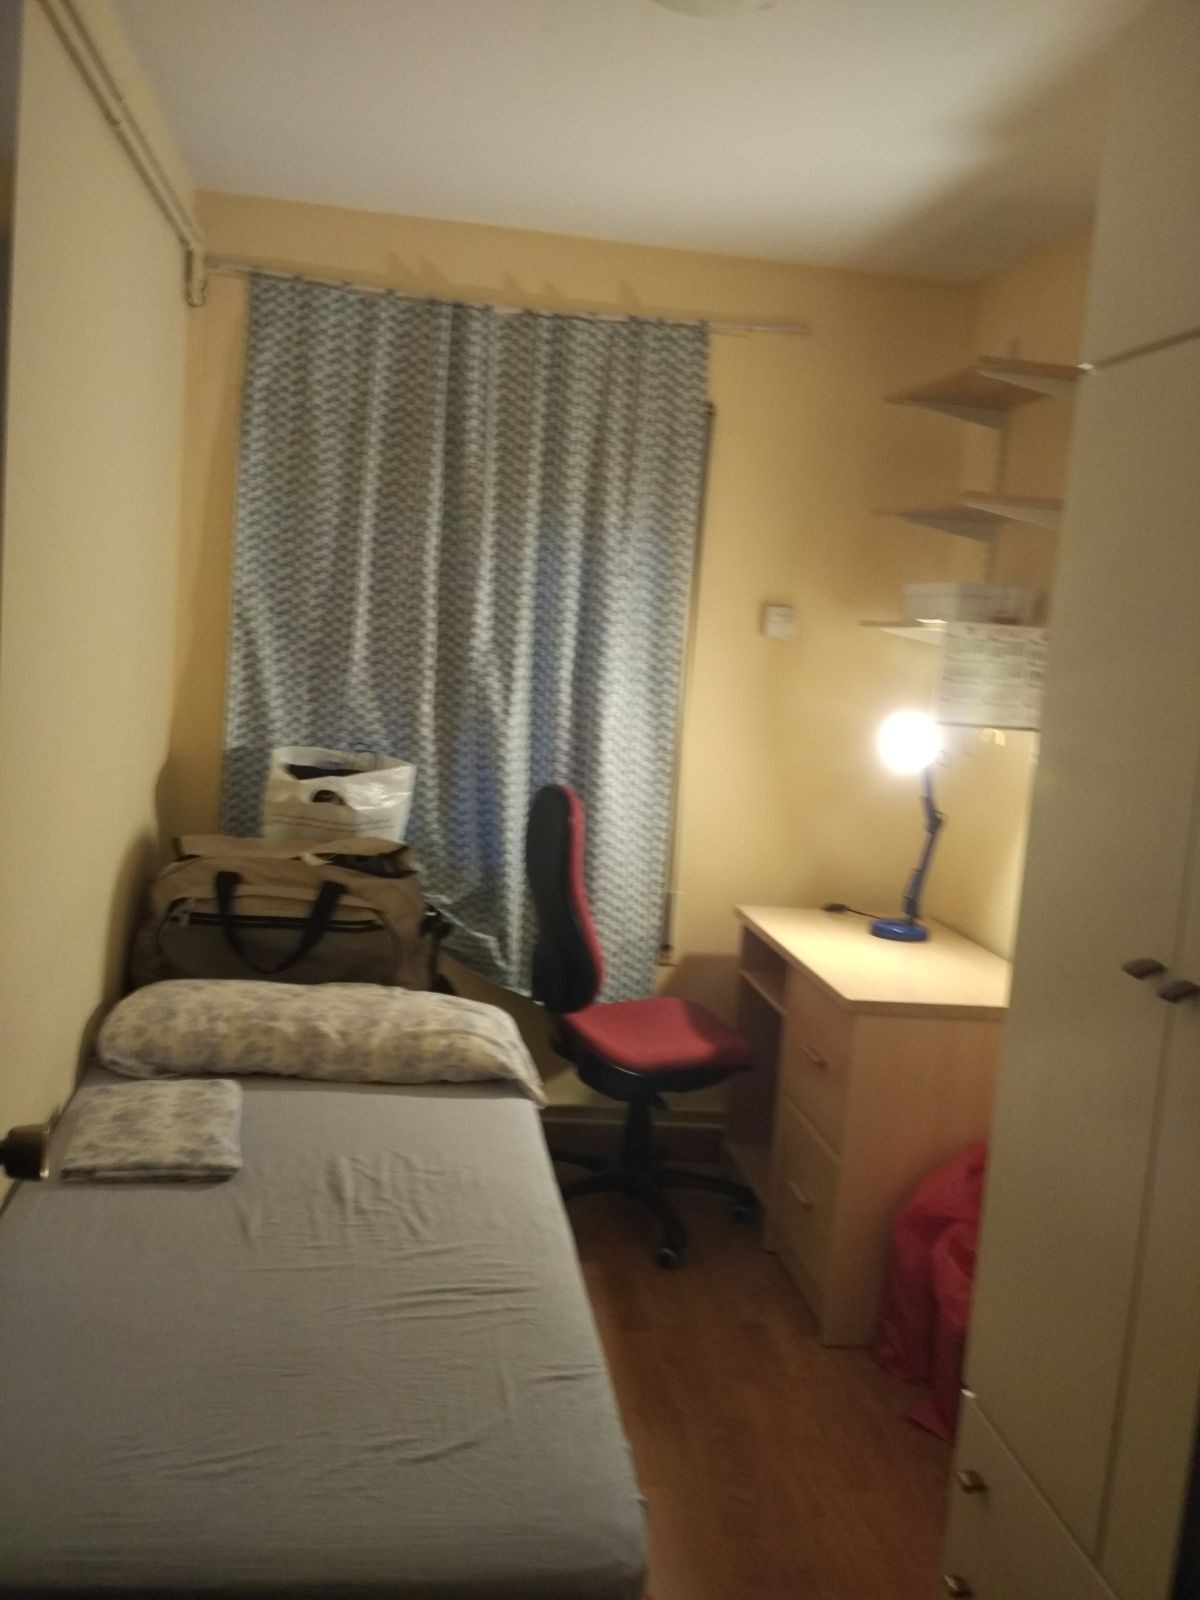 Lleida舒适公寓房间